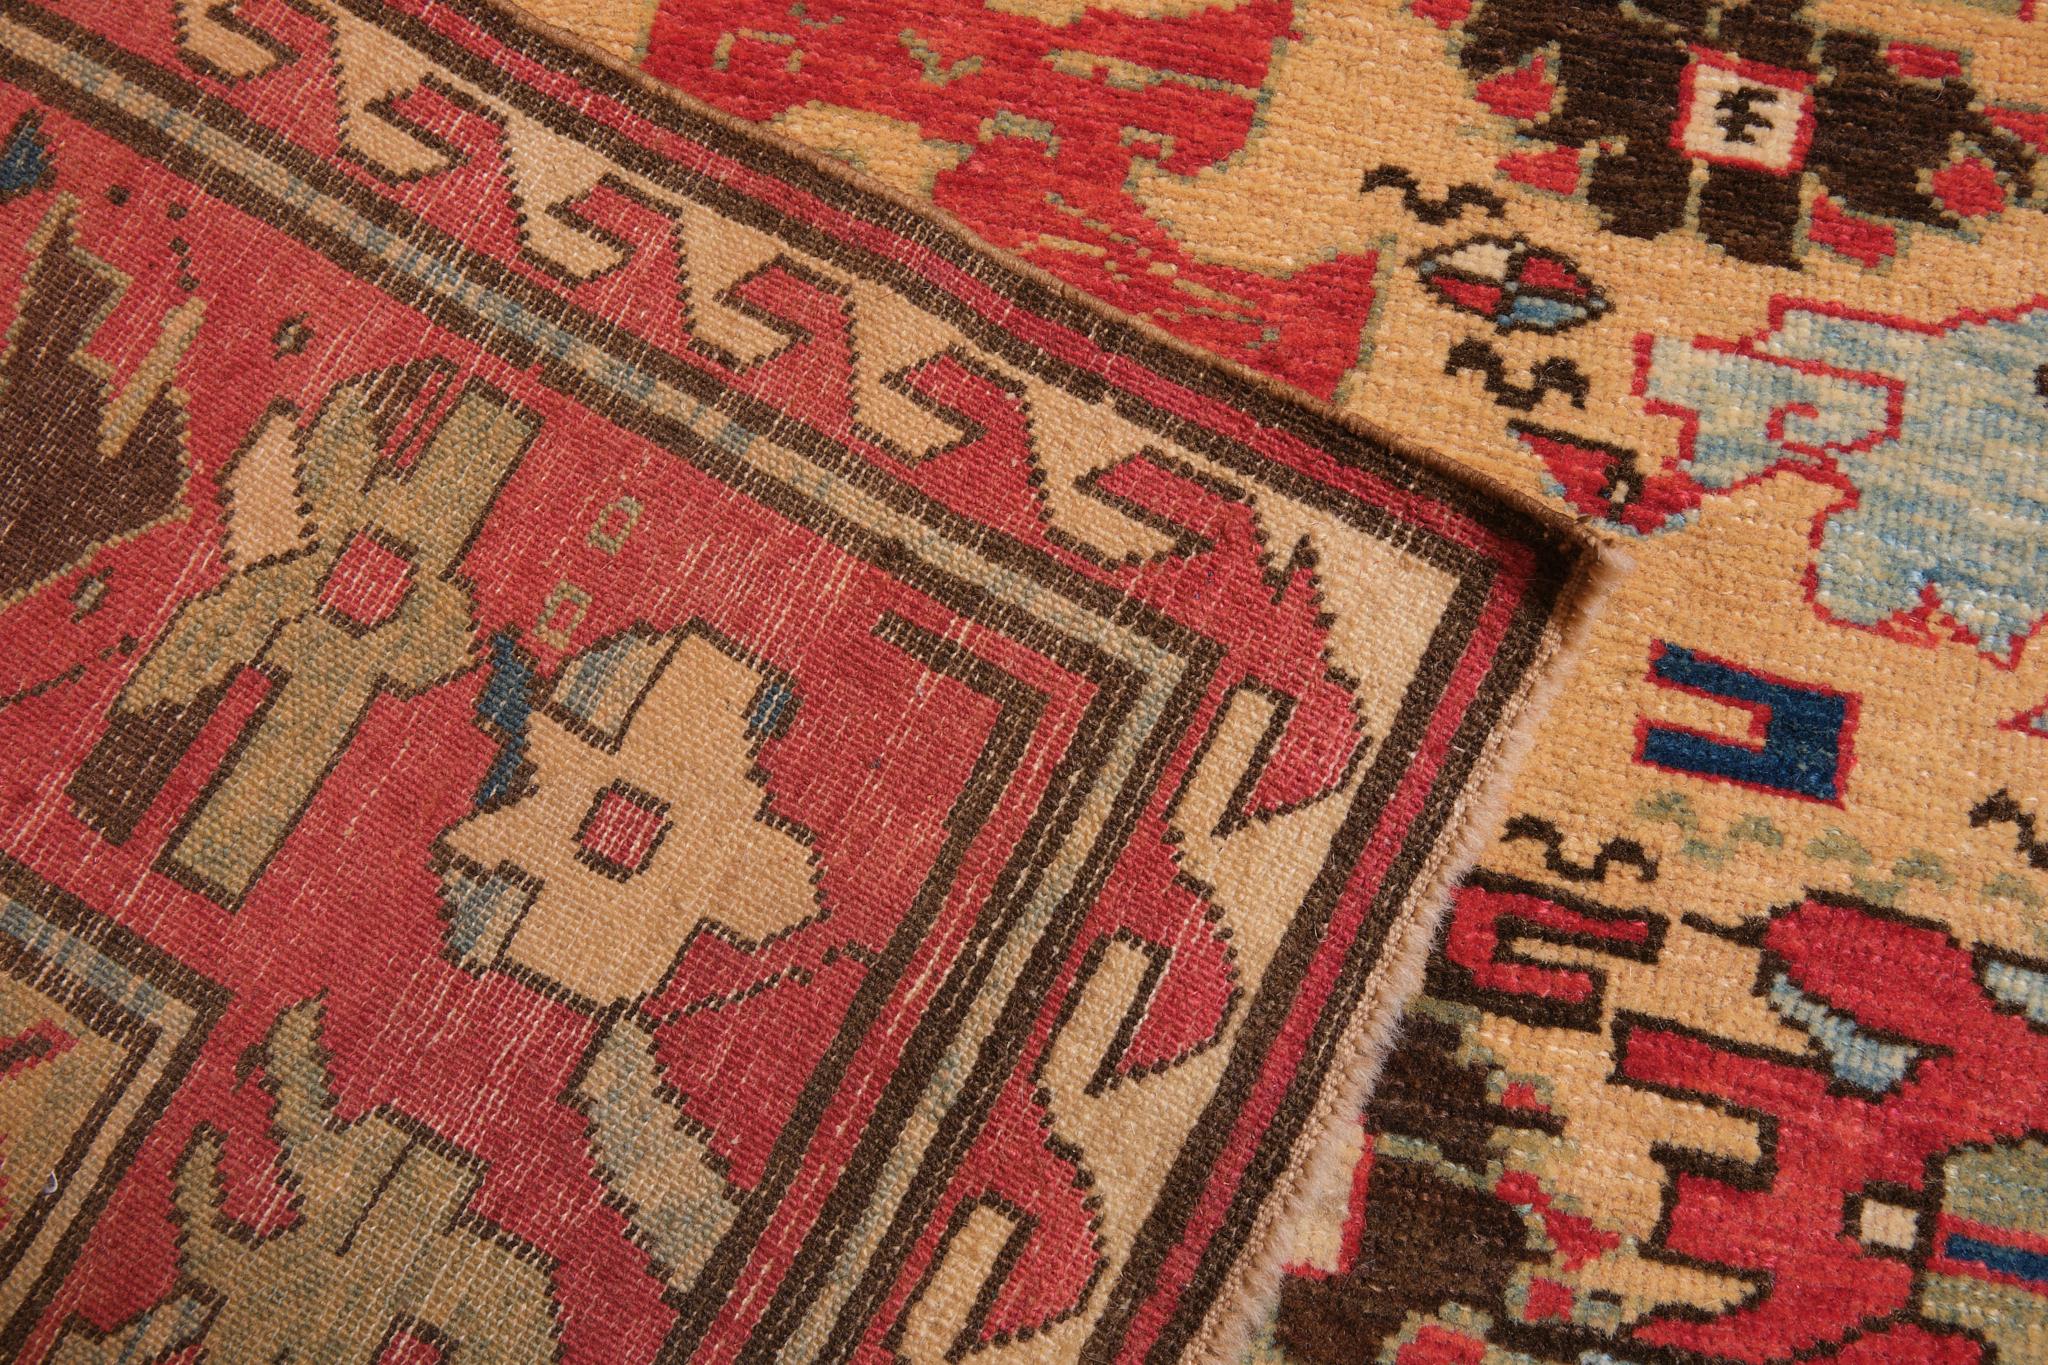 Vegetable Dyed Ararat Rugs Azerbaijan Harshang Desing Carpet Caucasian Revival Rug Natural Dyed For Sale